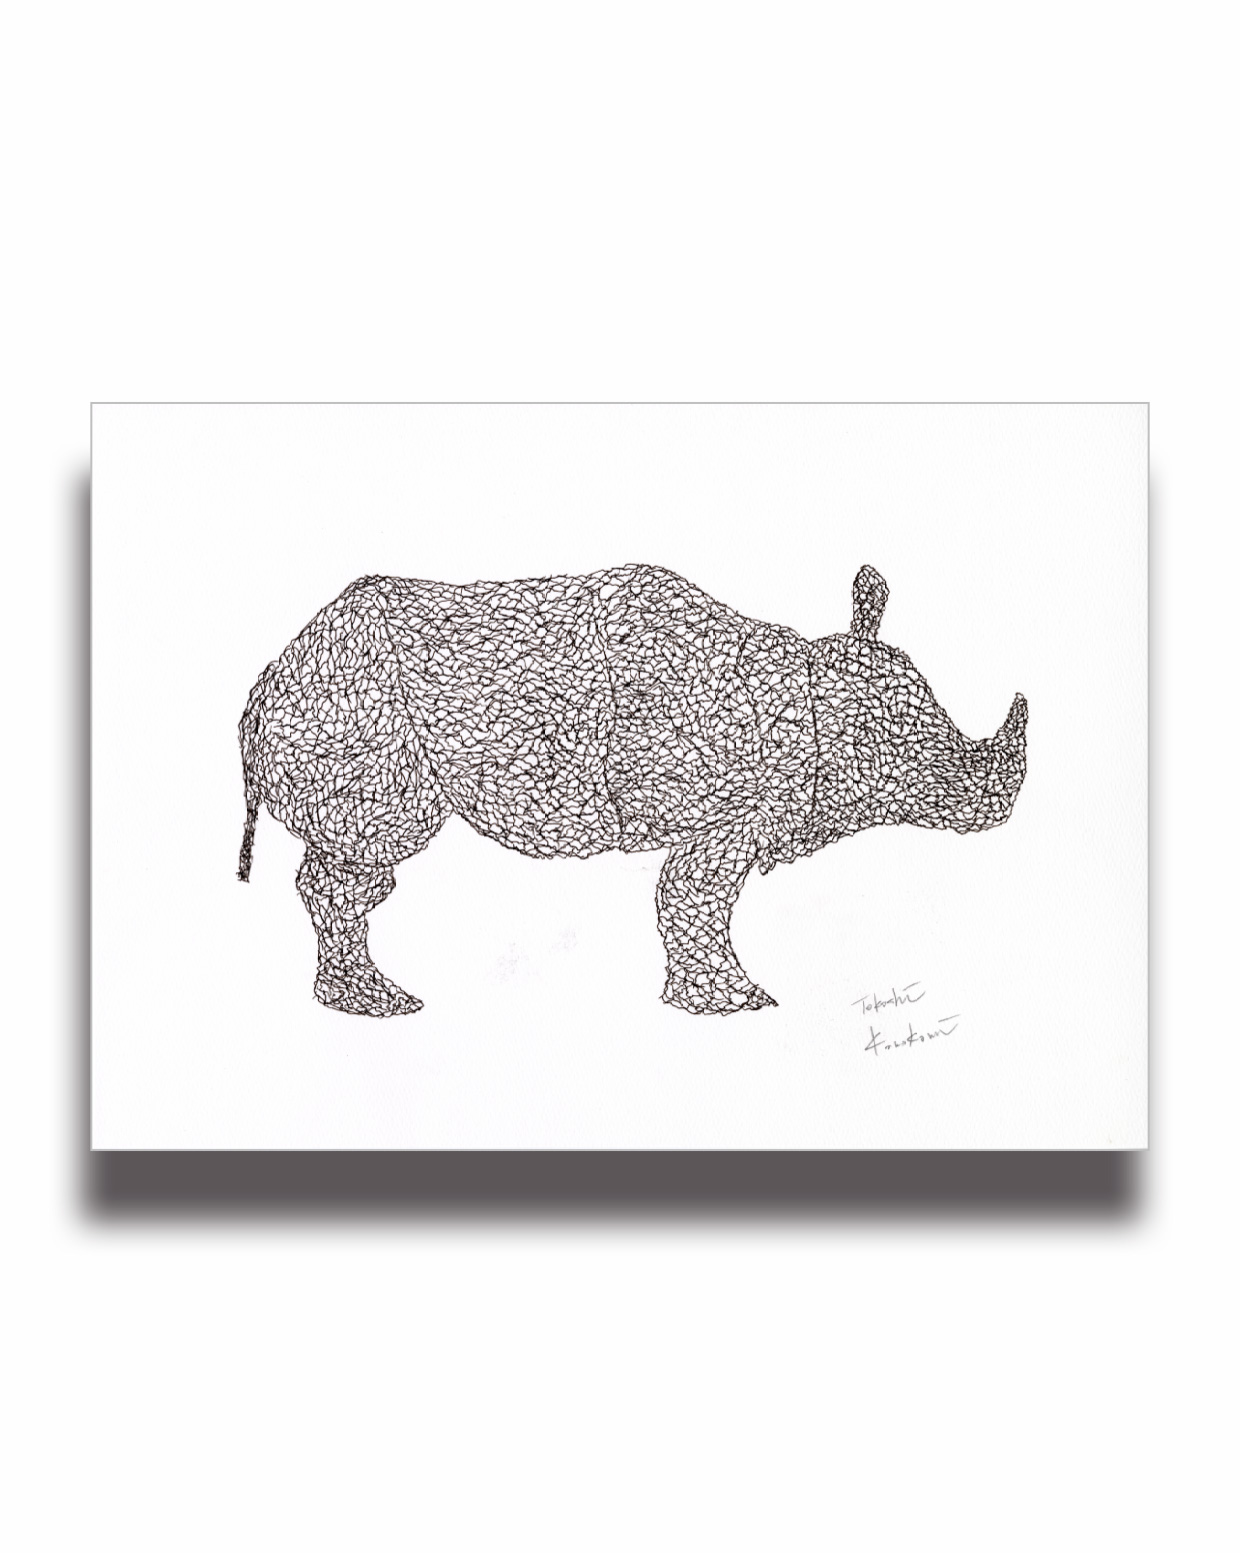 wirework [rhinoceros]